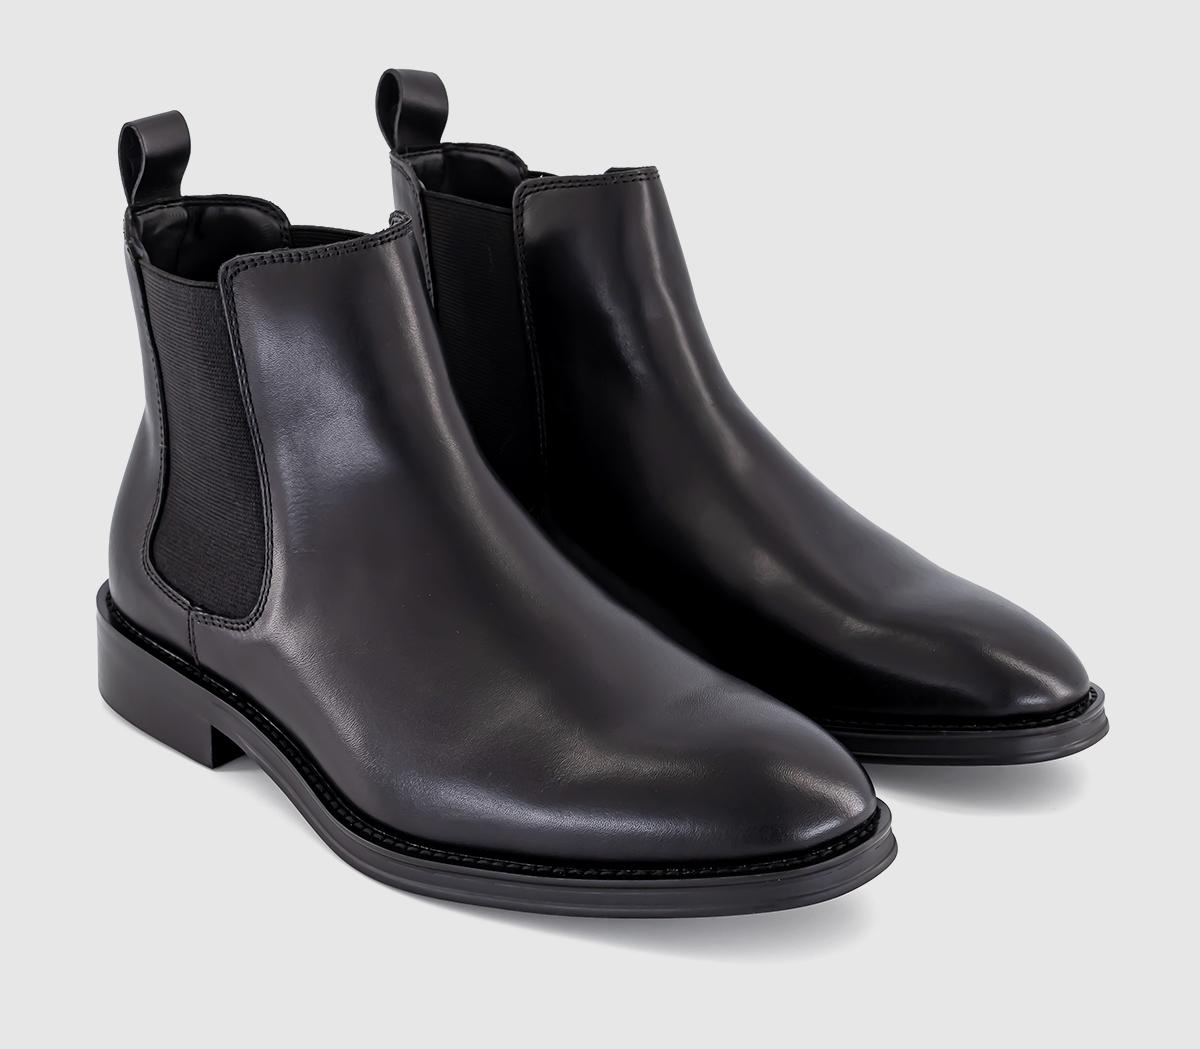 OFFICE Blenheim Chelsea Boots Black Leather - Men’s Boots